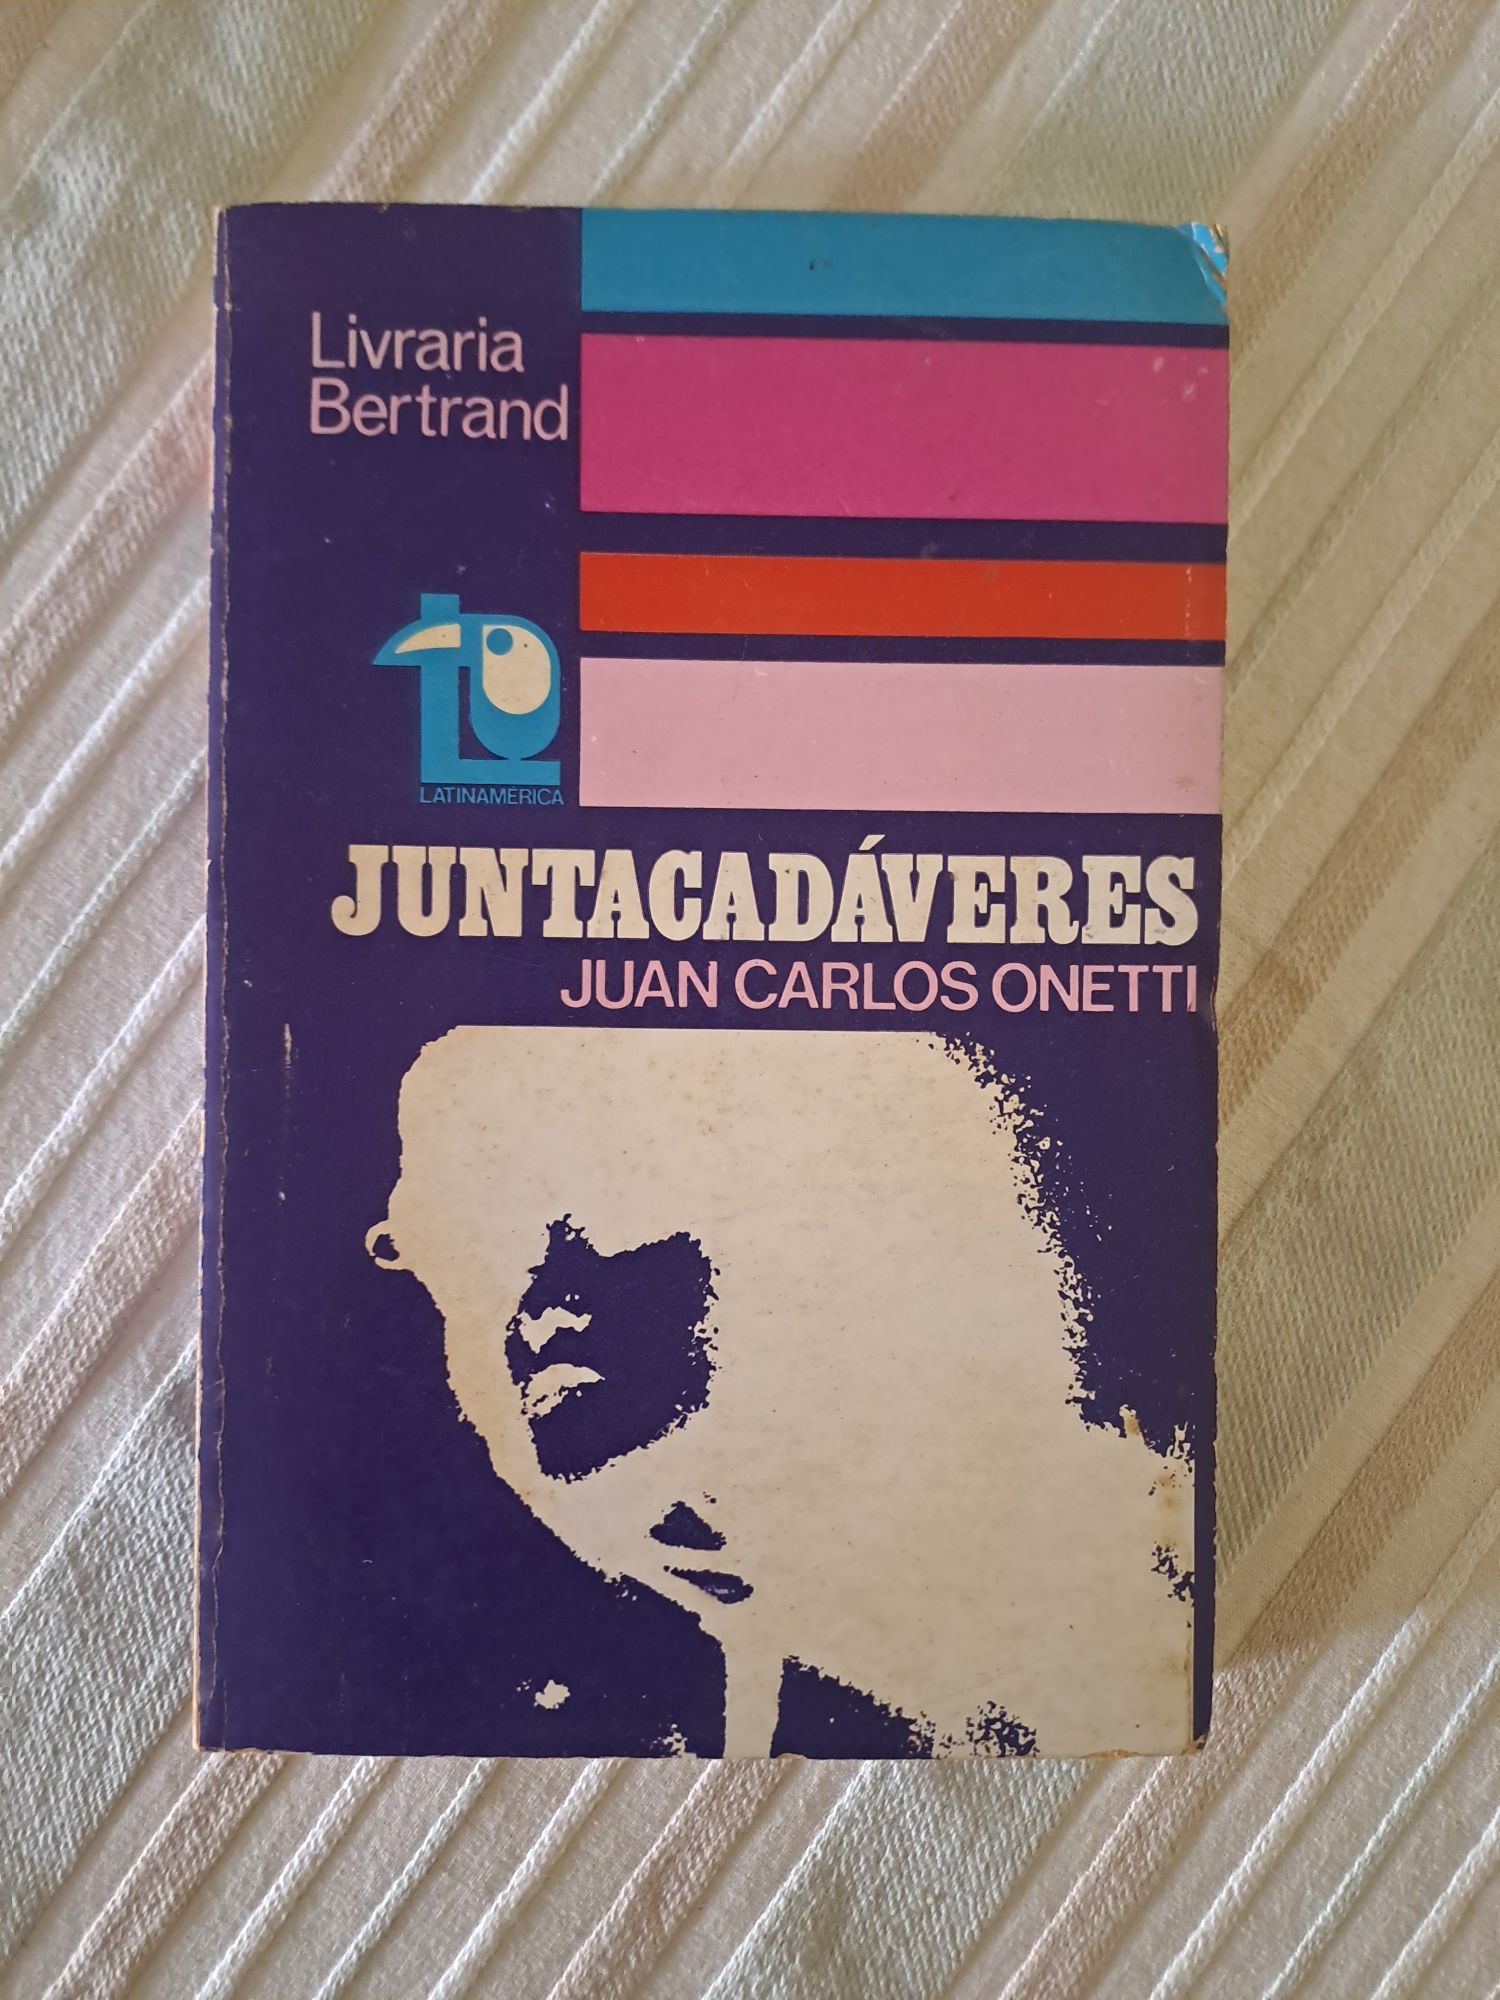 Livro "Juntacadáveres", de Juan Carlos Onetti